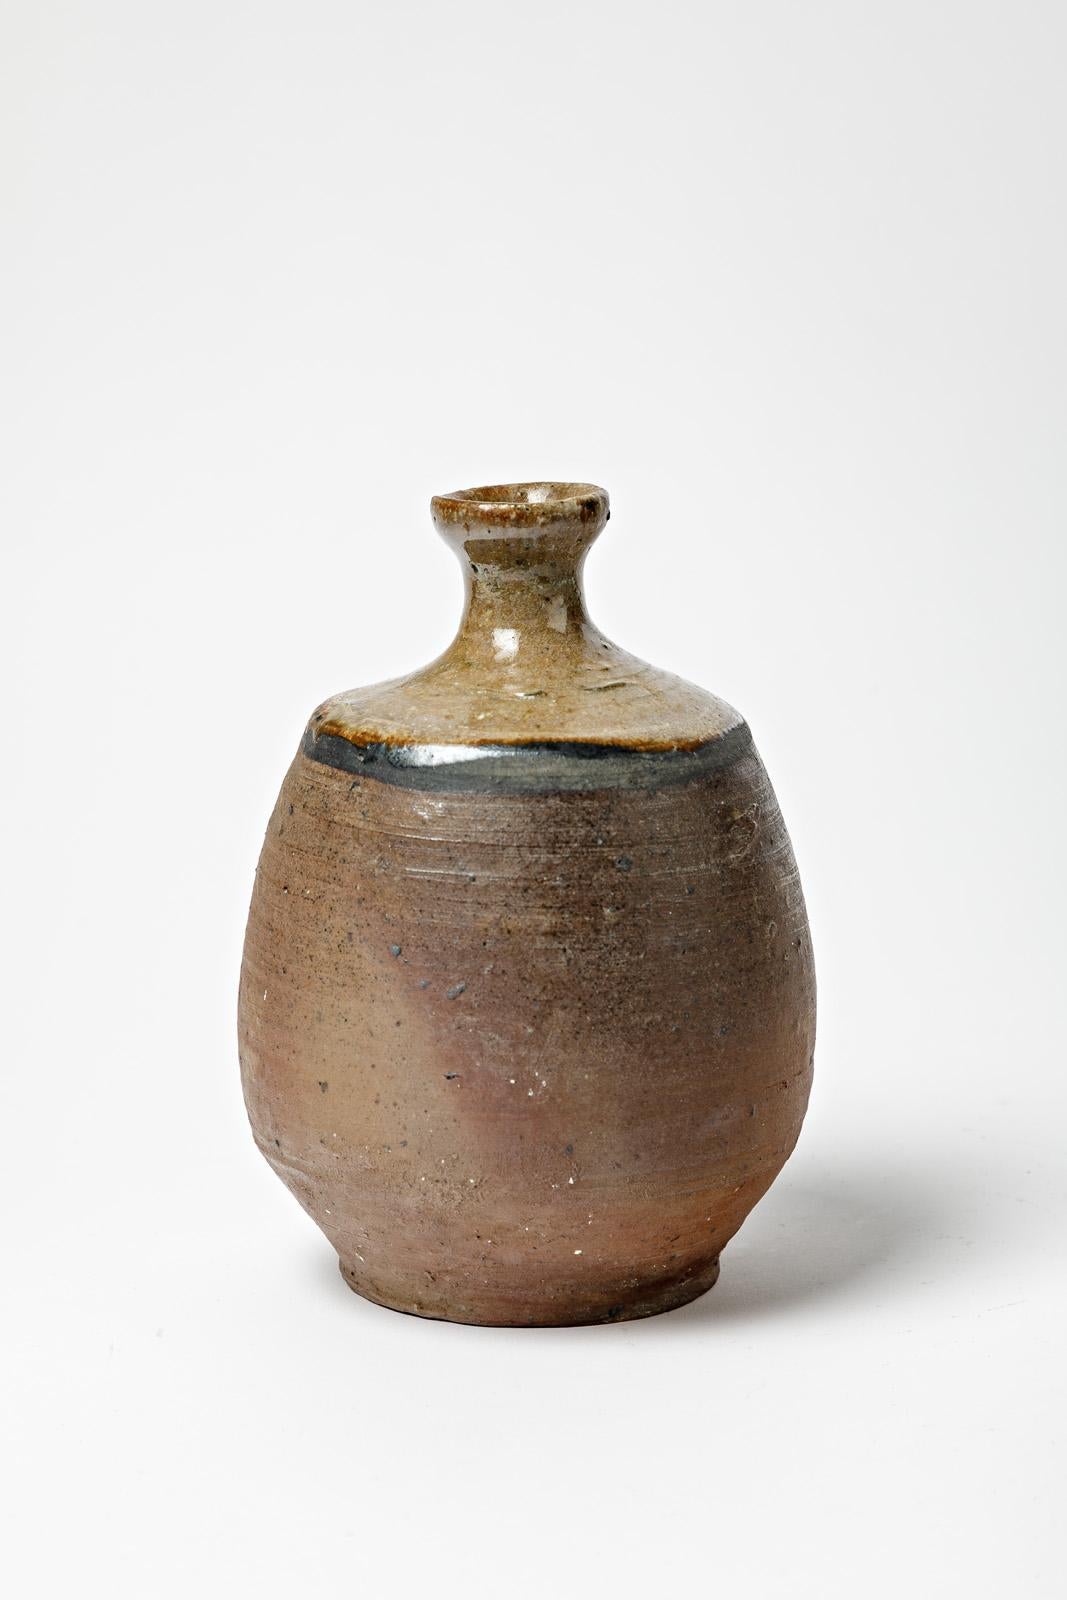 French Black and brown design 20th century stoneware ceramic vase La Borne 1970 signed For Sale